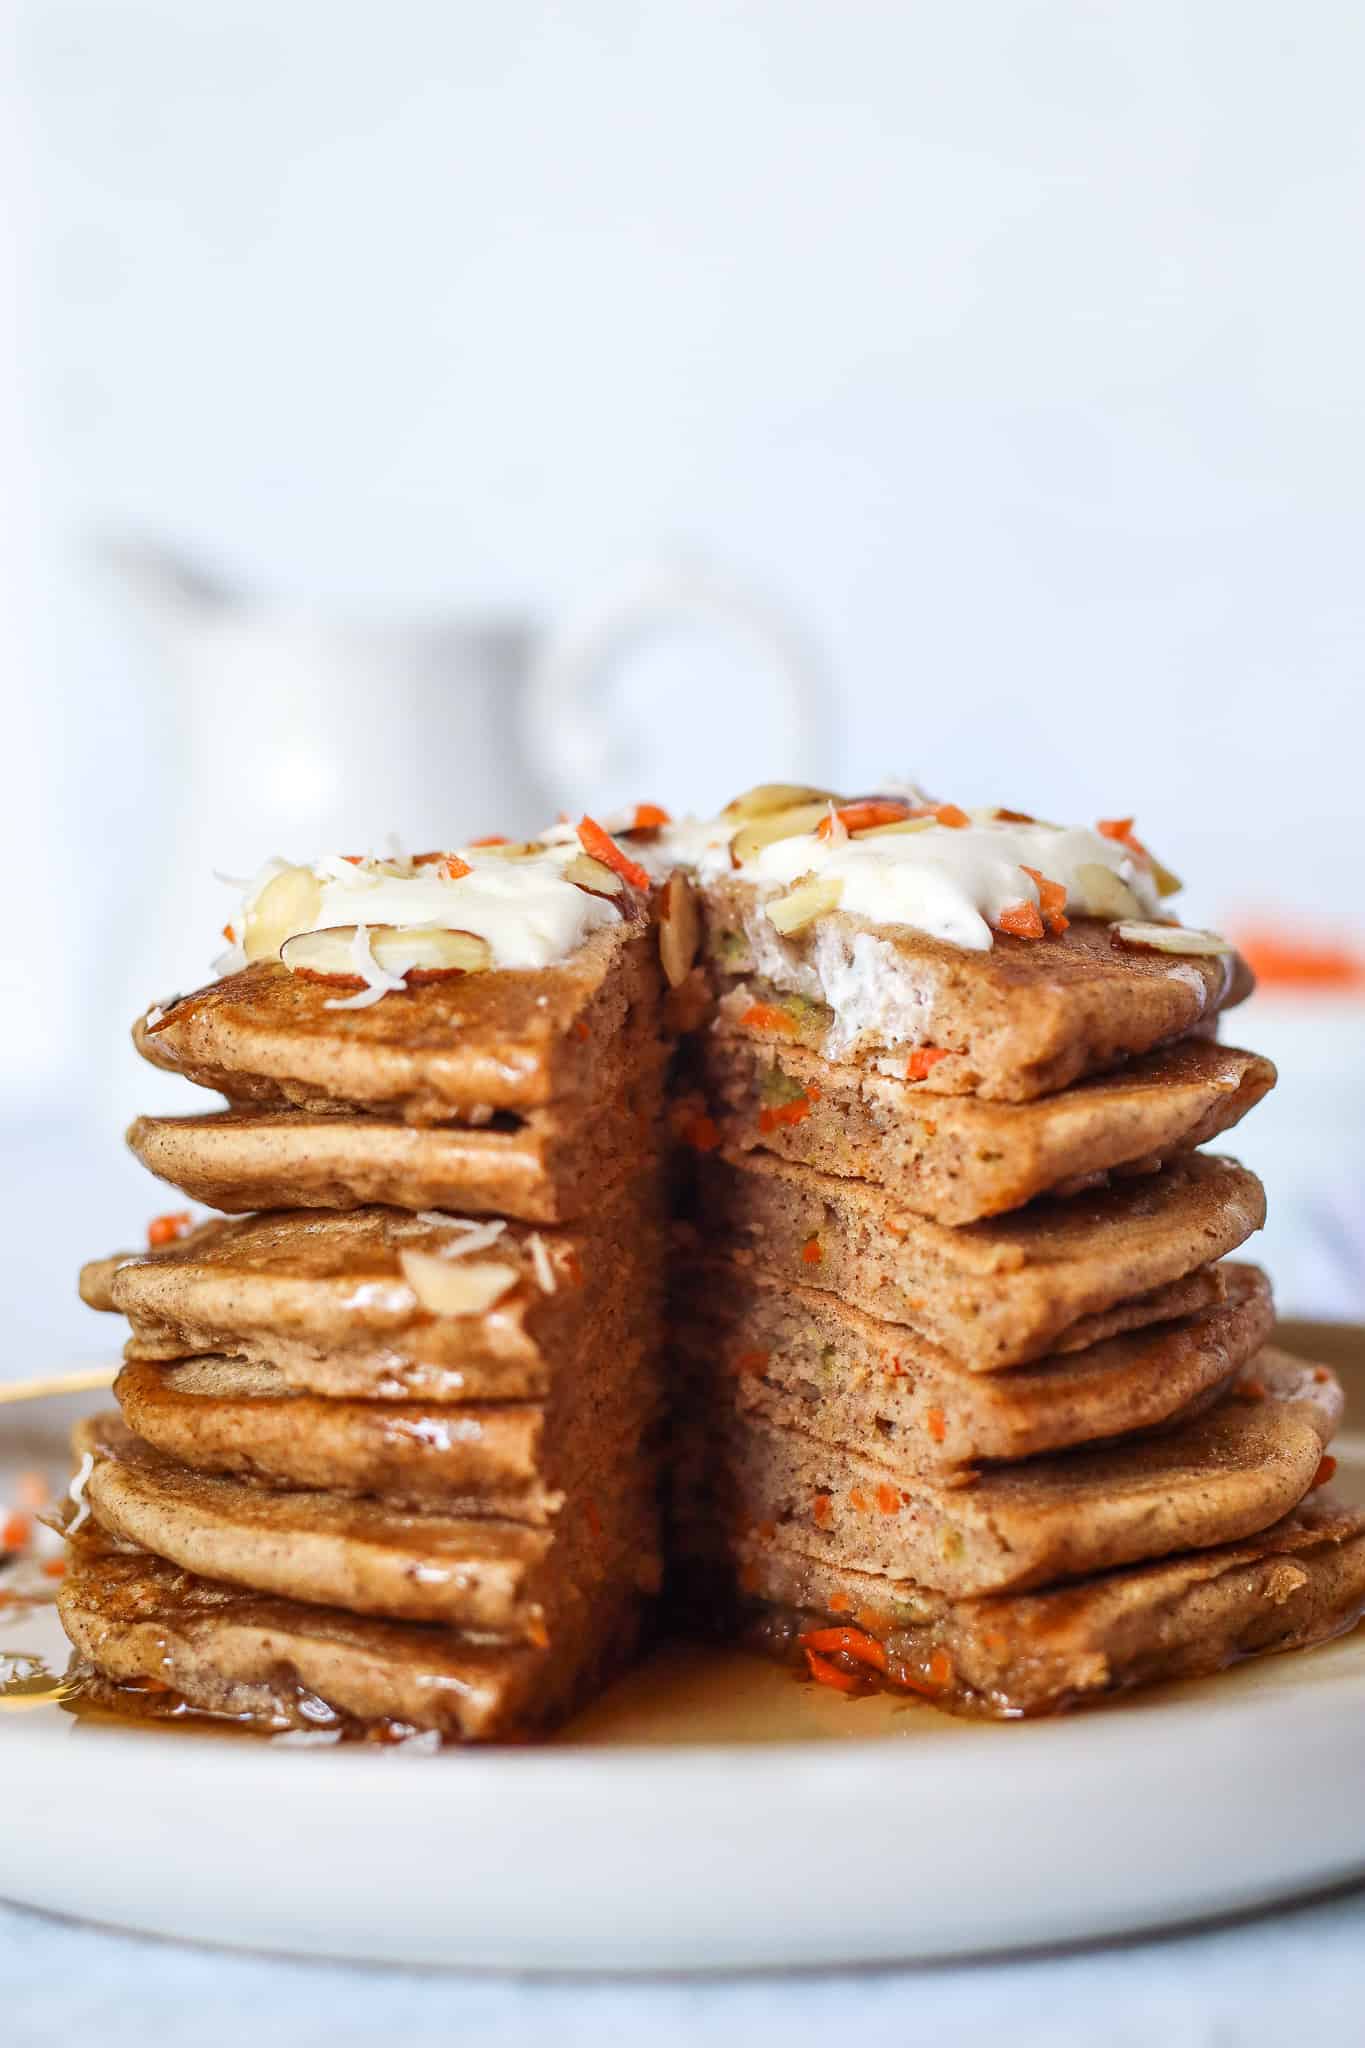 Delicious Gluten-Free Carrot Cake Pancakes